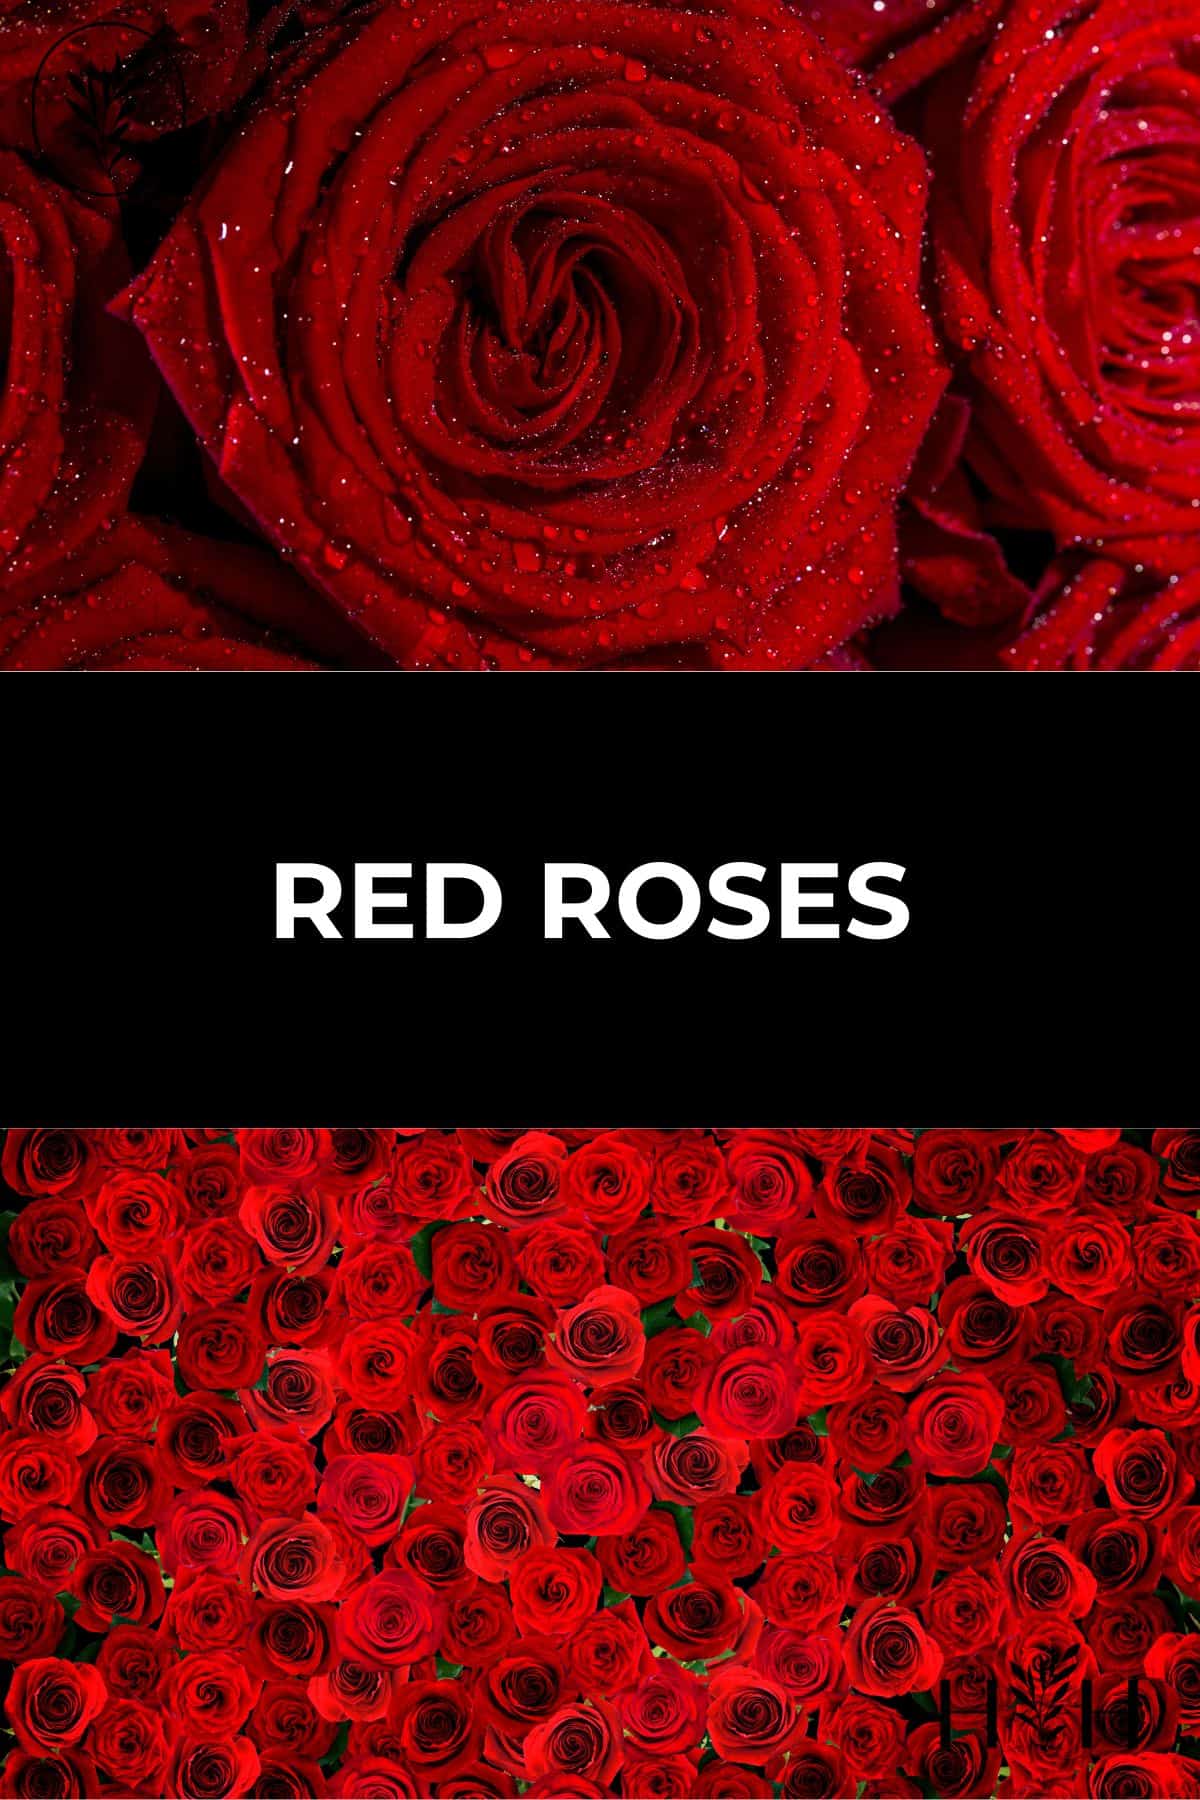 Red roses via @home4theharvest